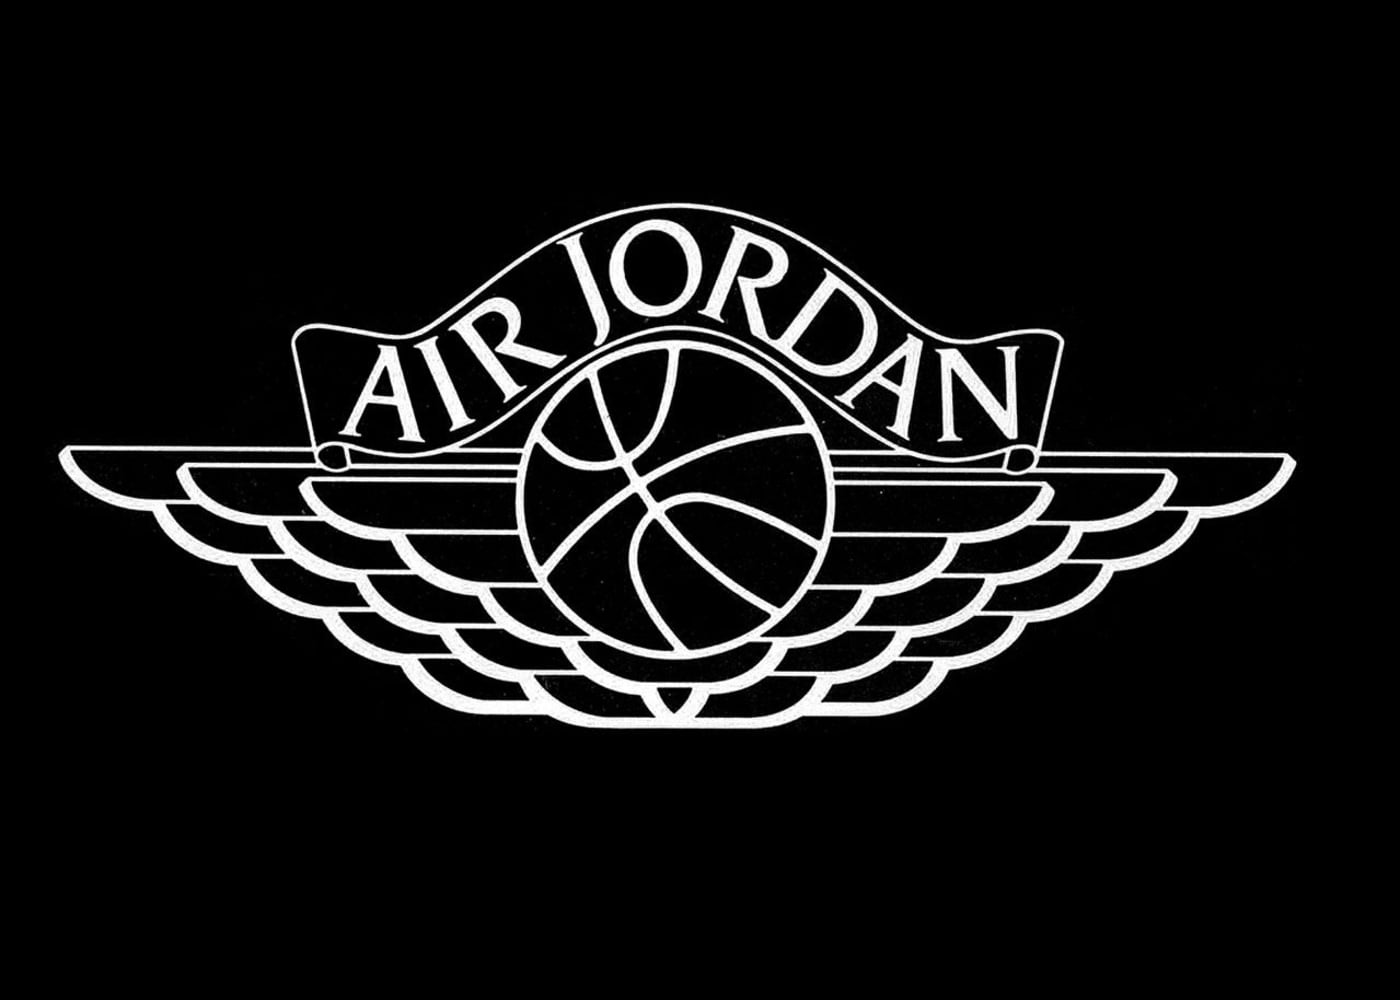 how to draw the air jordan logo